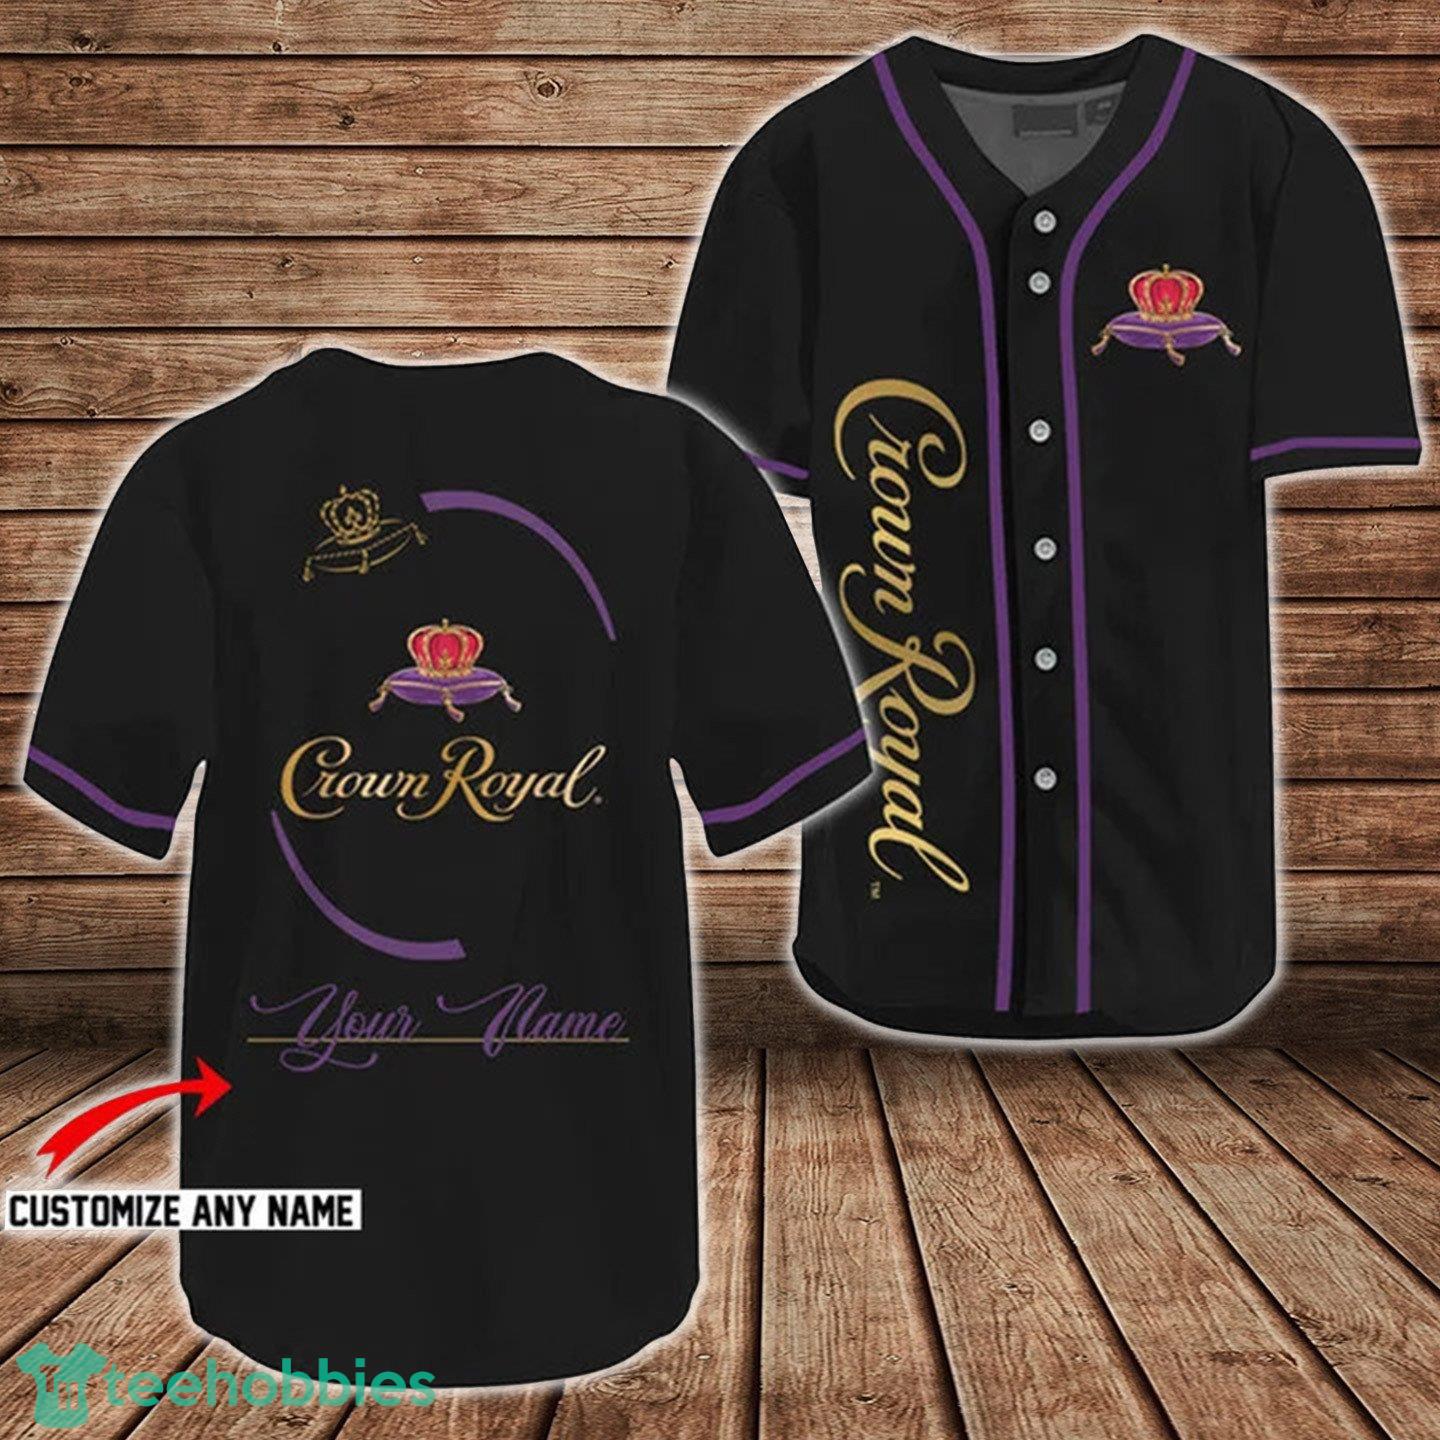 Personalized Black Crown Royal Baseball Jersey Shirt Product Photo 1